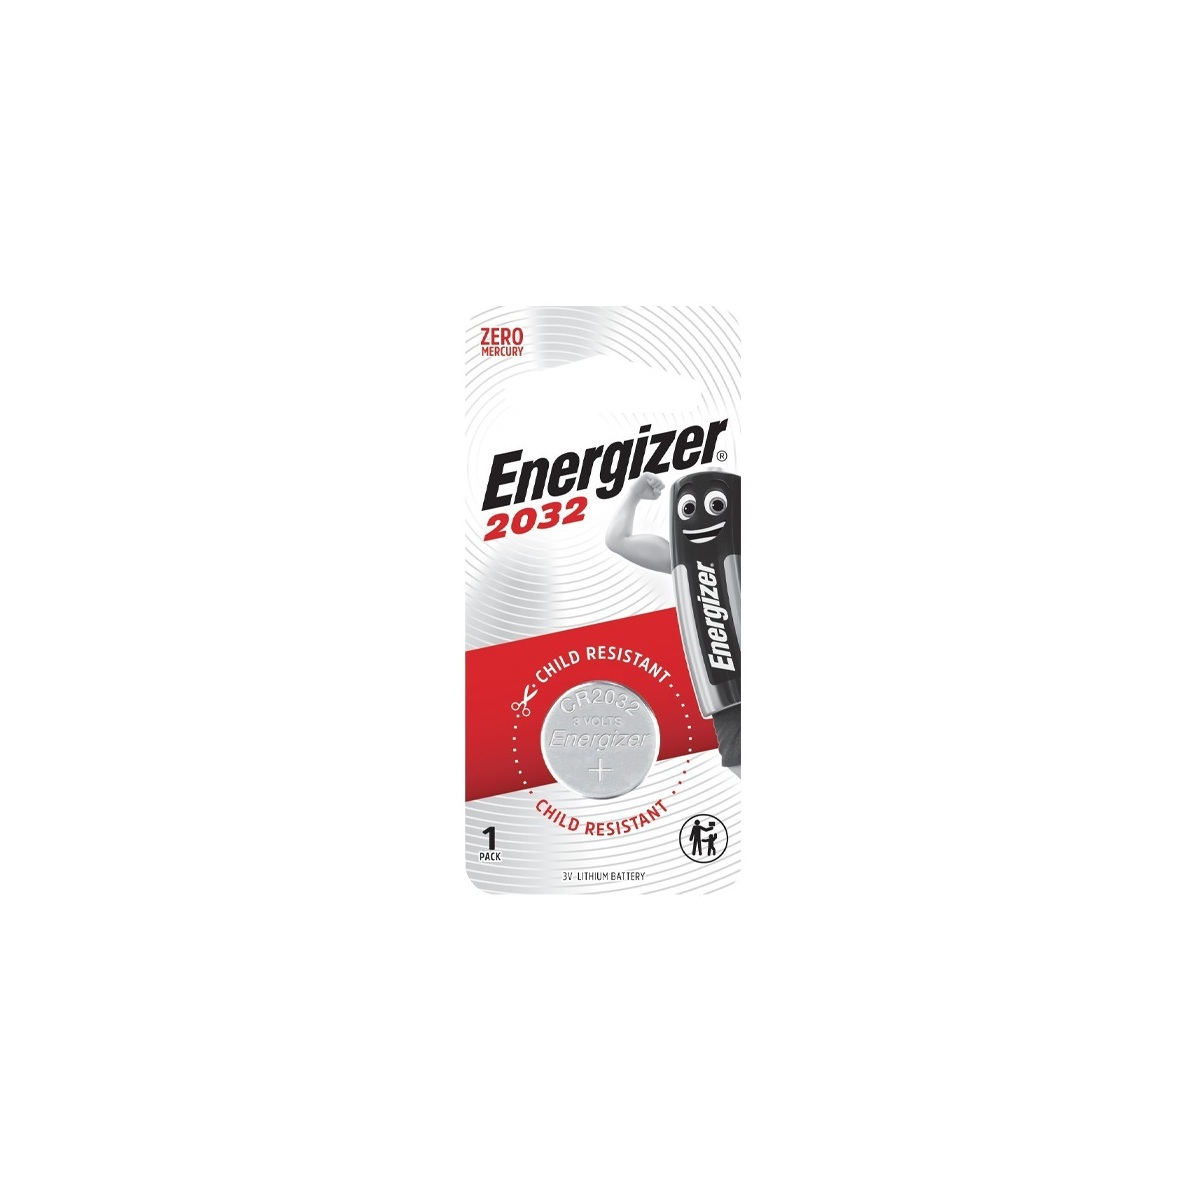 Energizer Lithium Battery CR2032 (1pk)